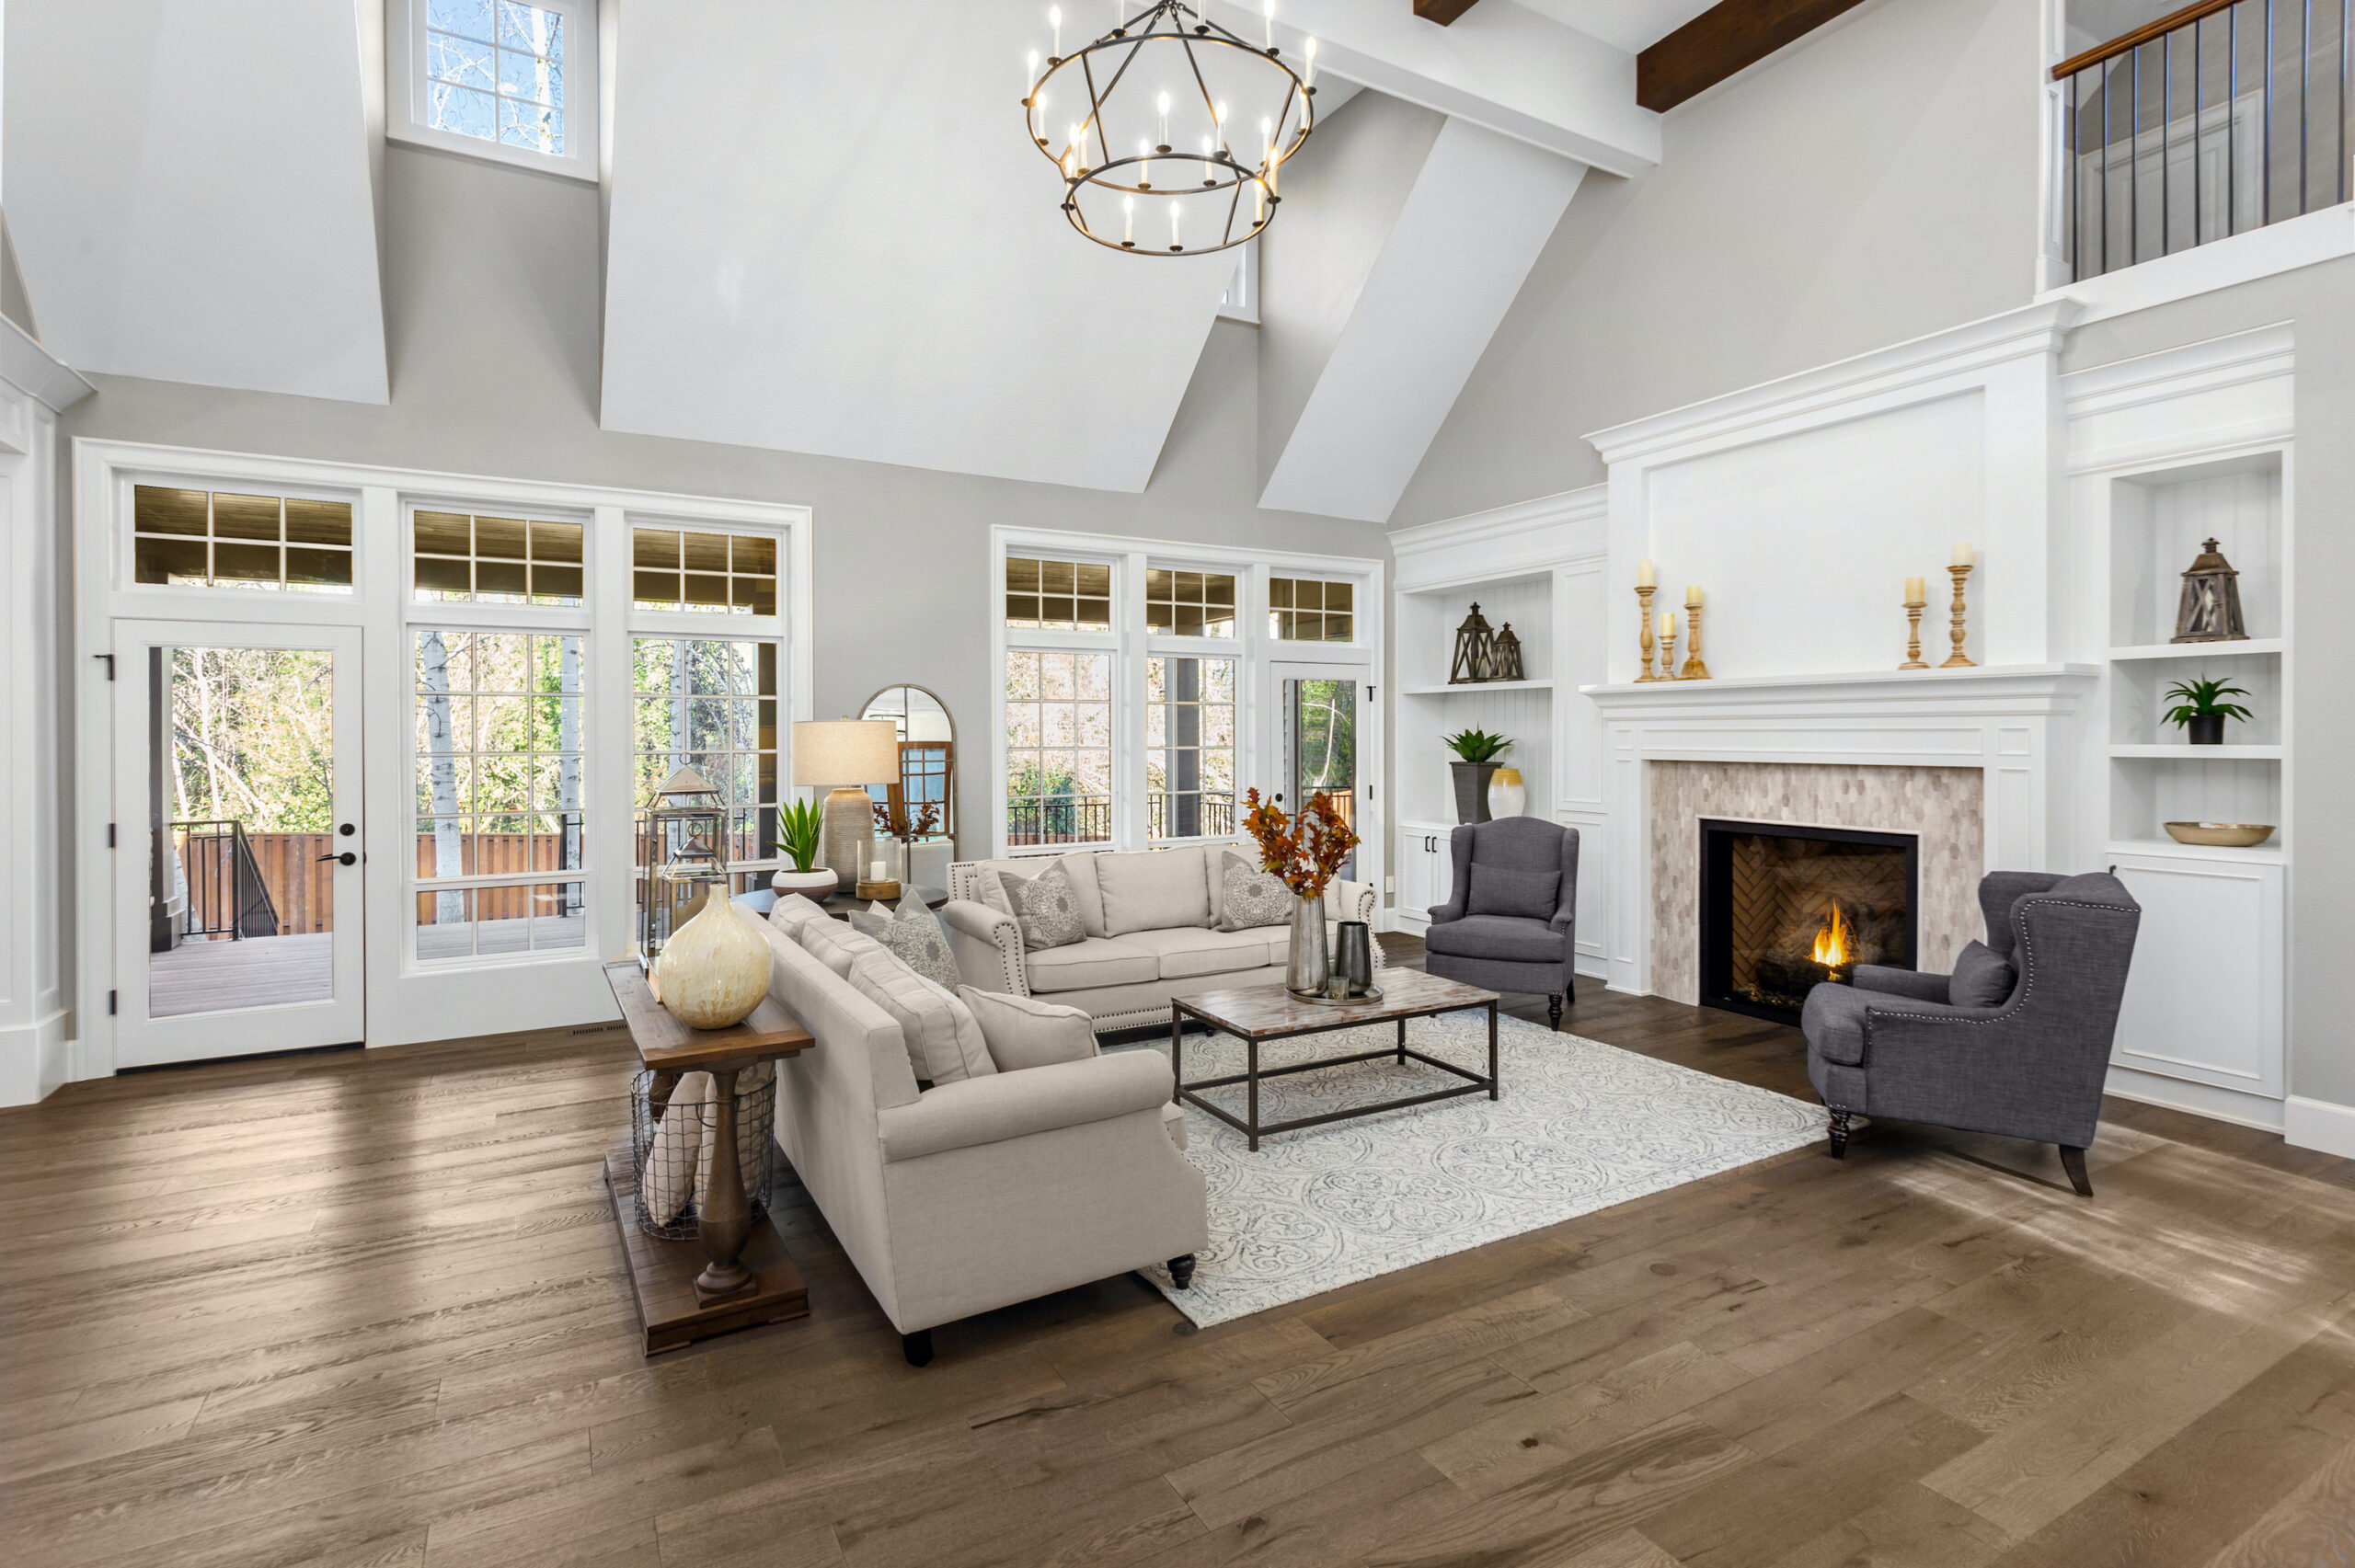 hardwood floors with area rug in living room